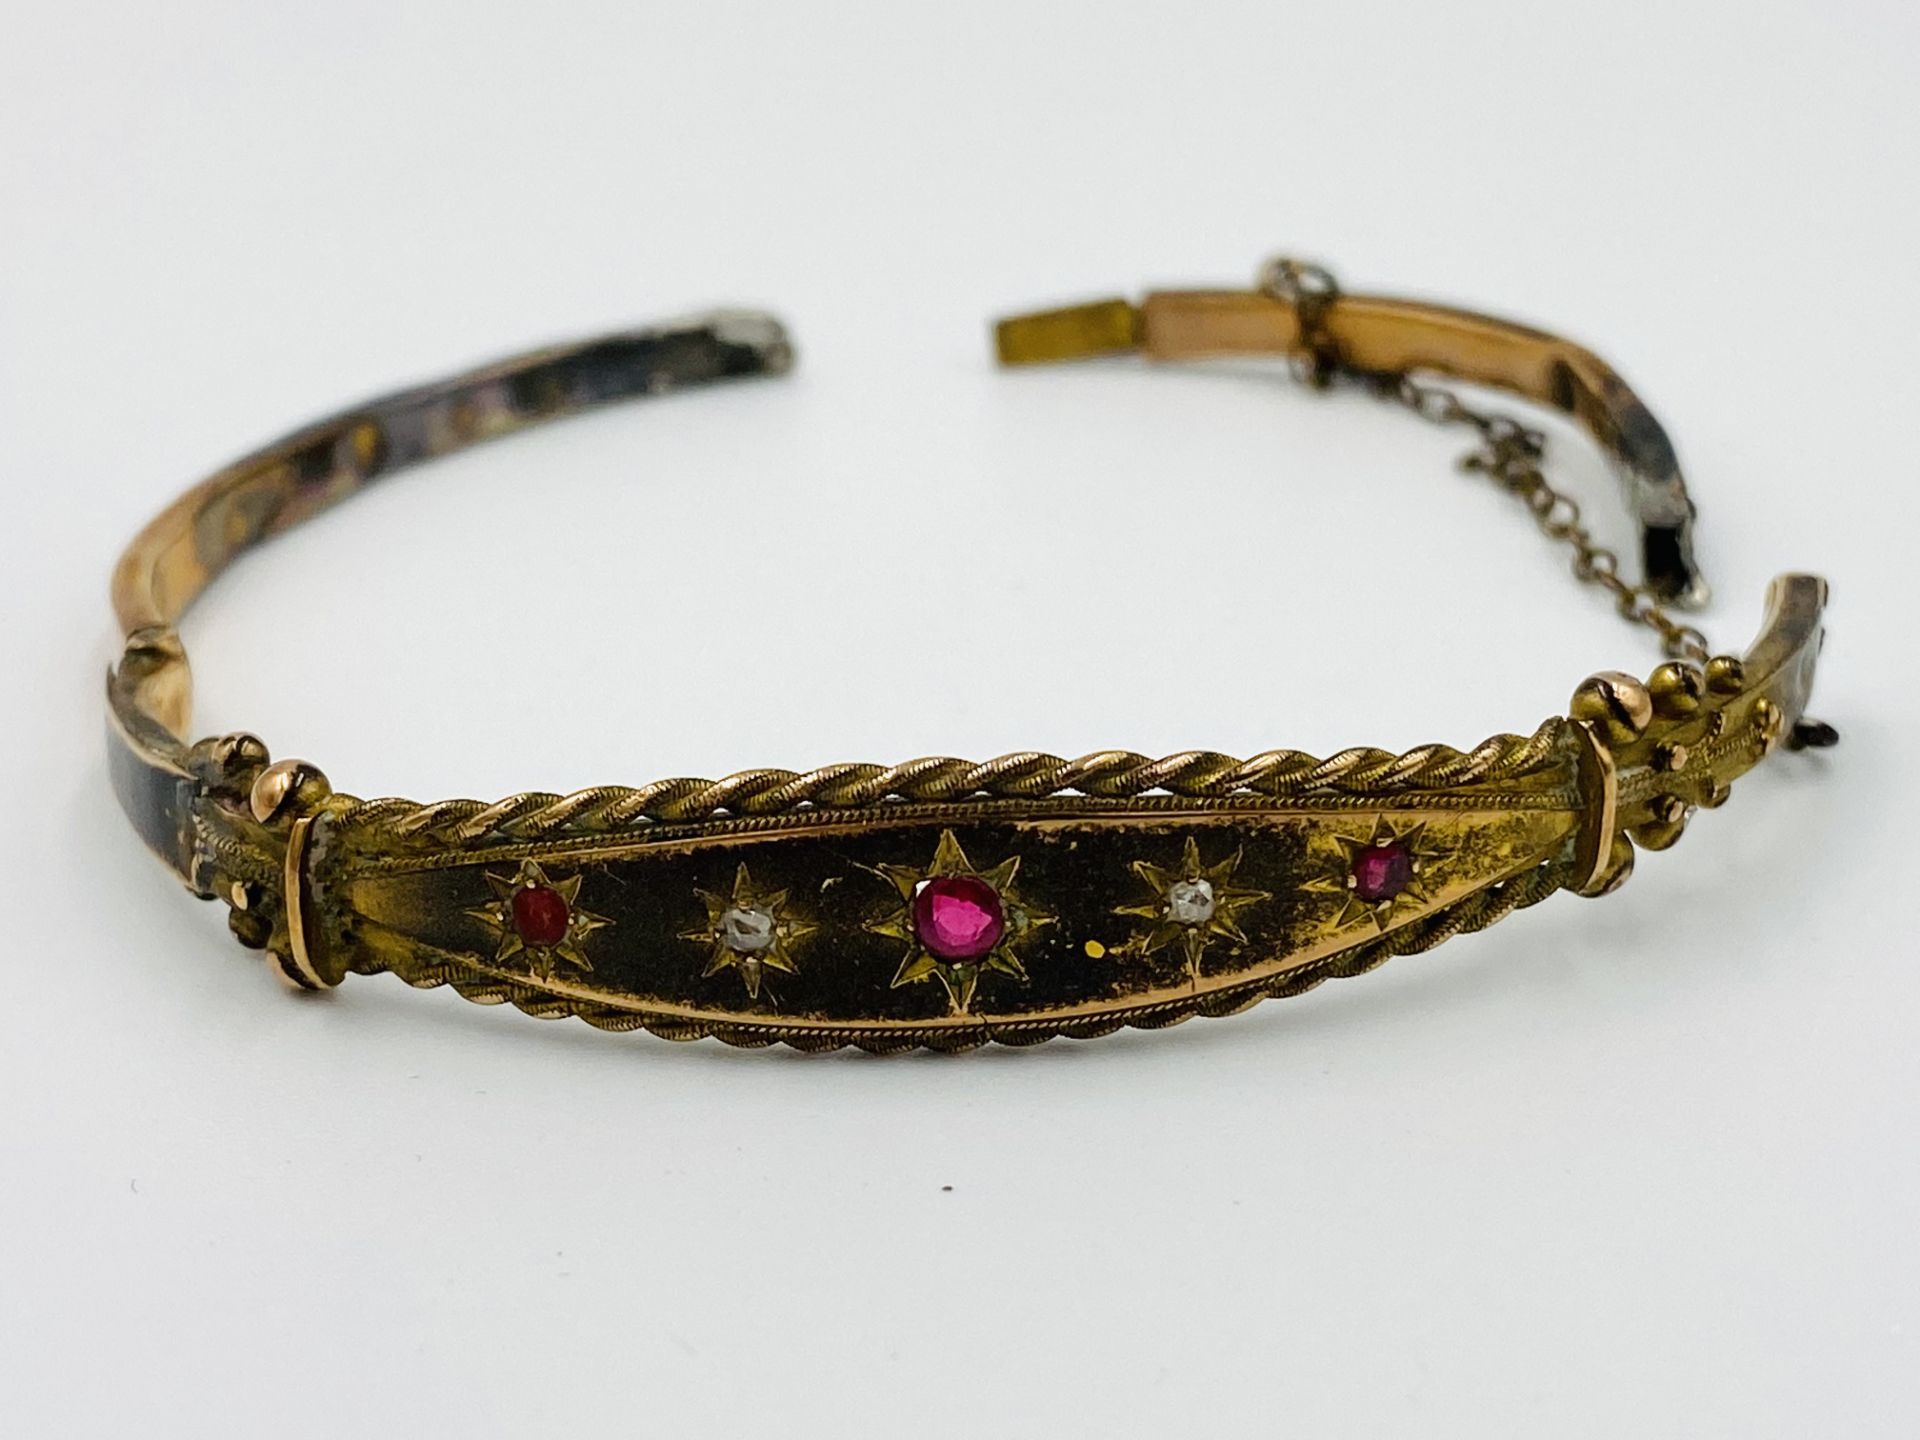 9ct gold bracelet (as found)